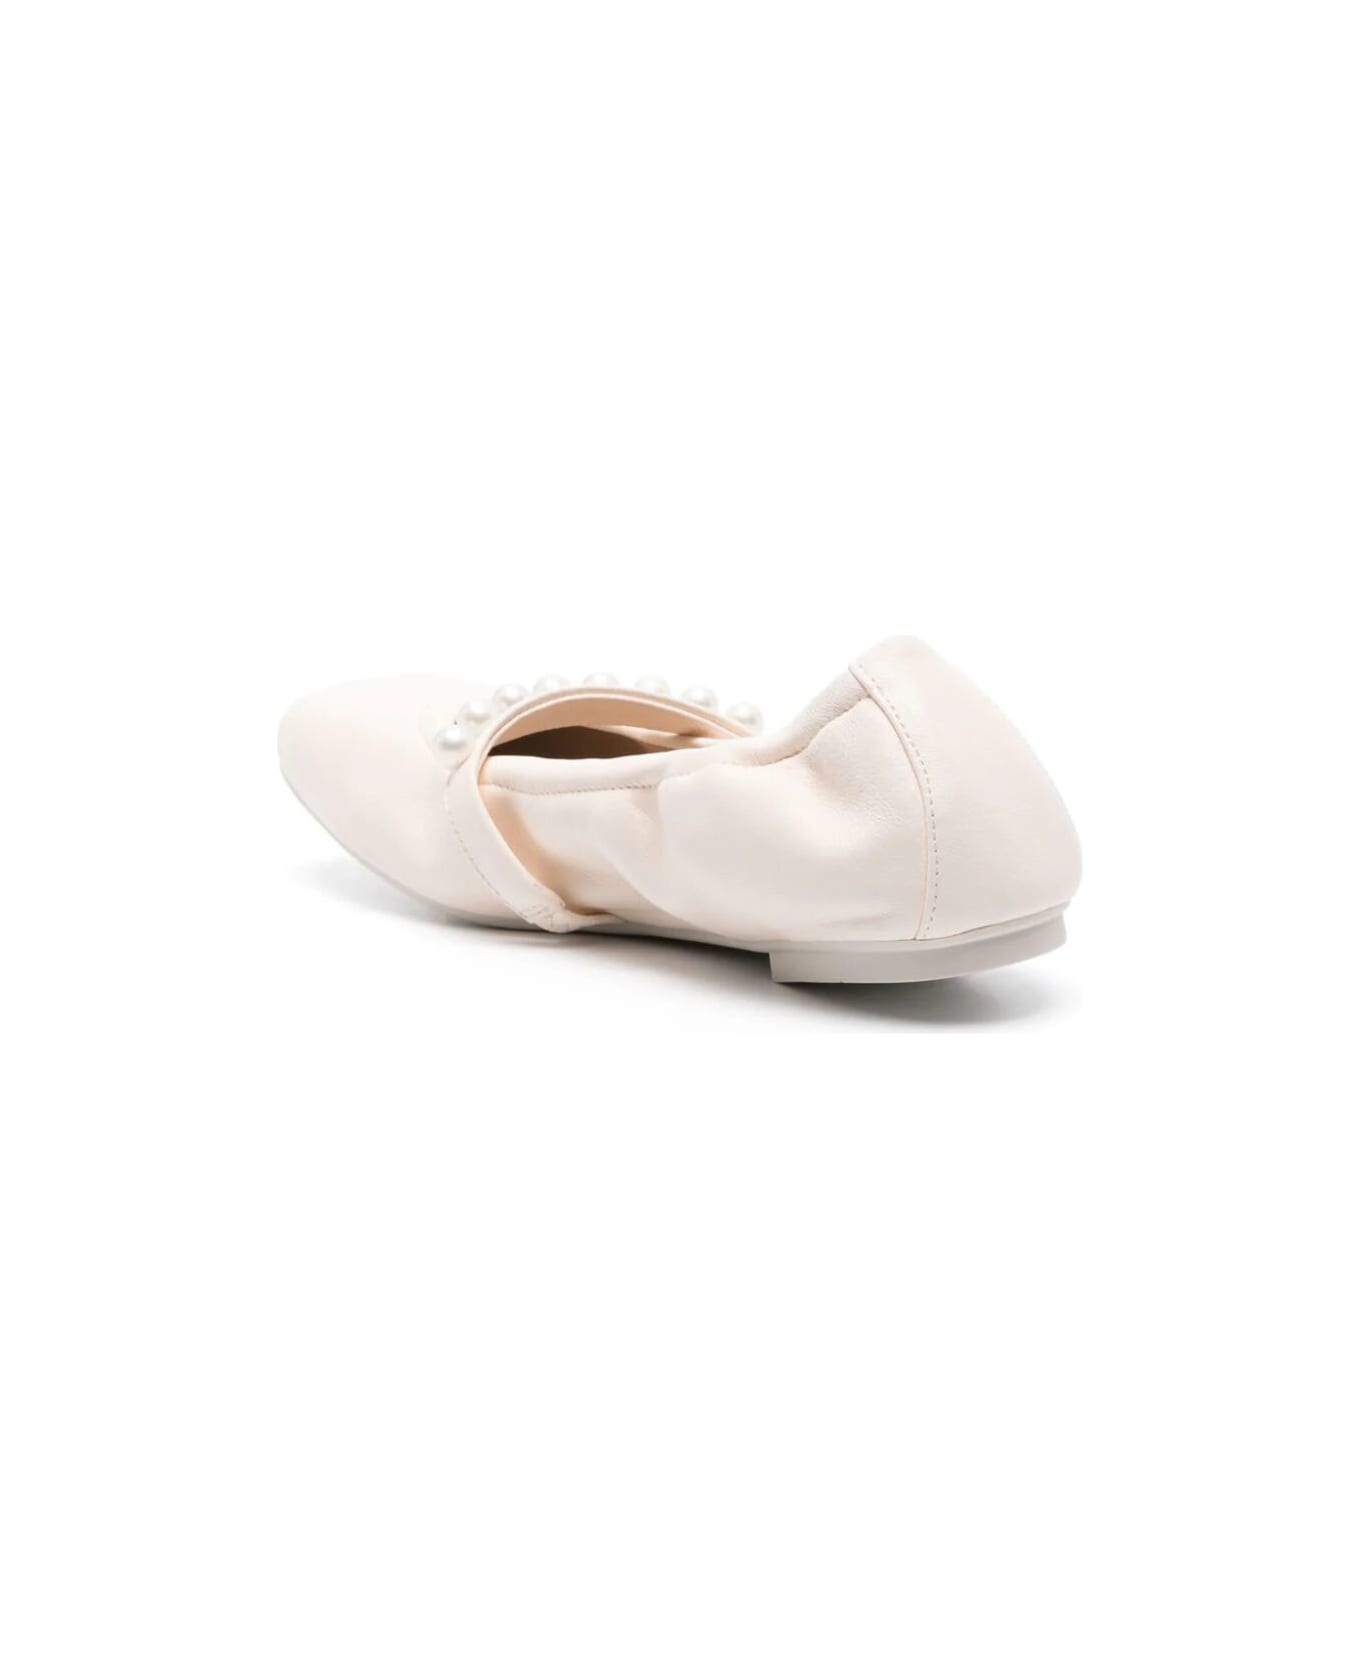 Stuart Weitzman Goldie Ballet Flat - Seashell フラットシューズ